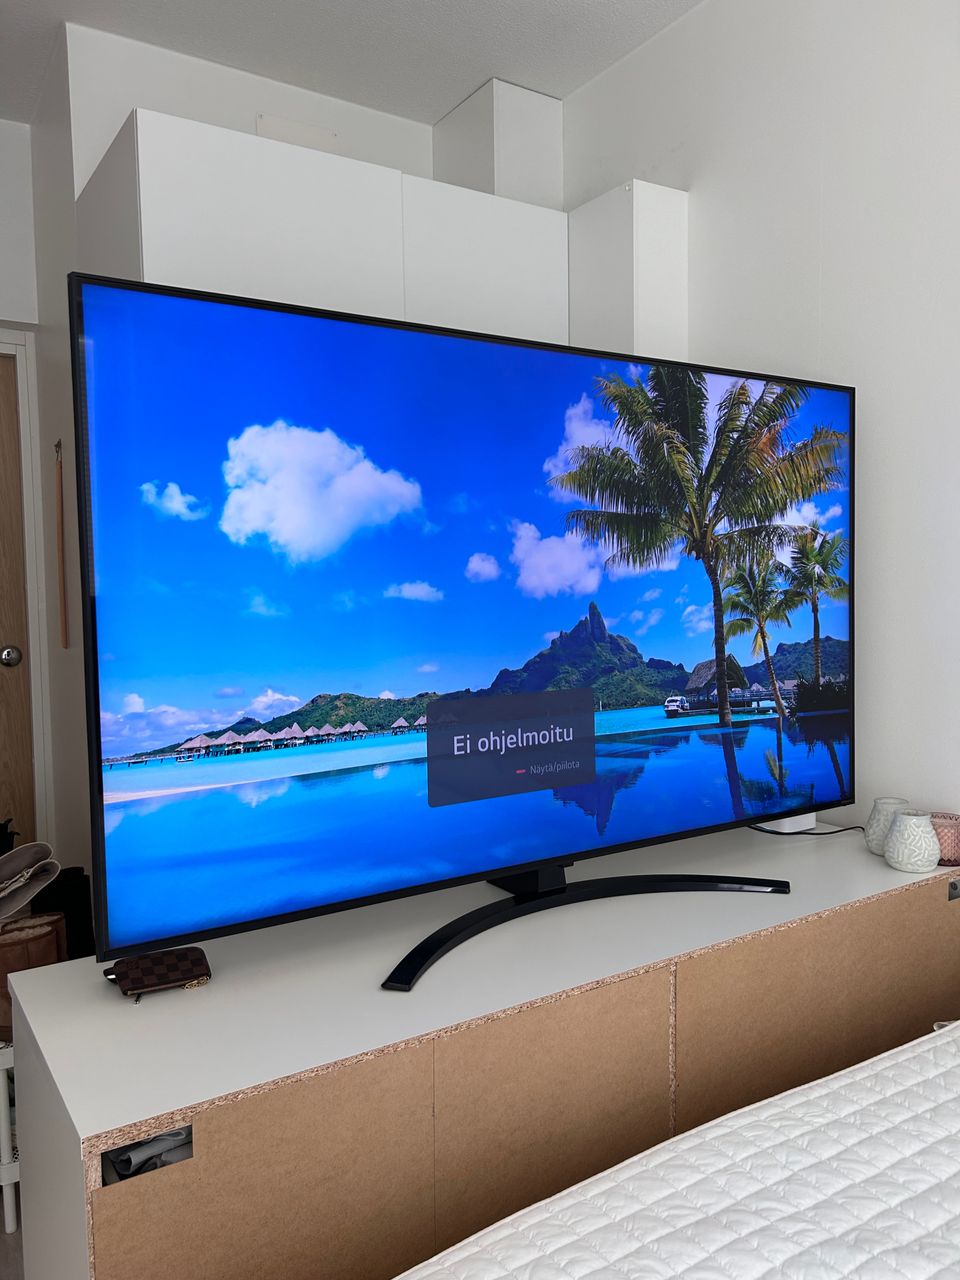 LG 65" NANO76 4K LCD TV (2022)